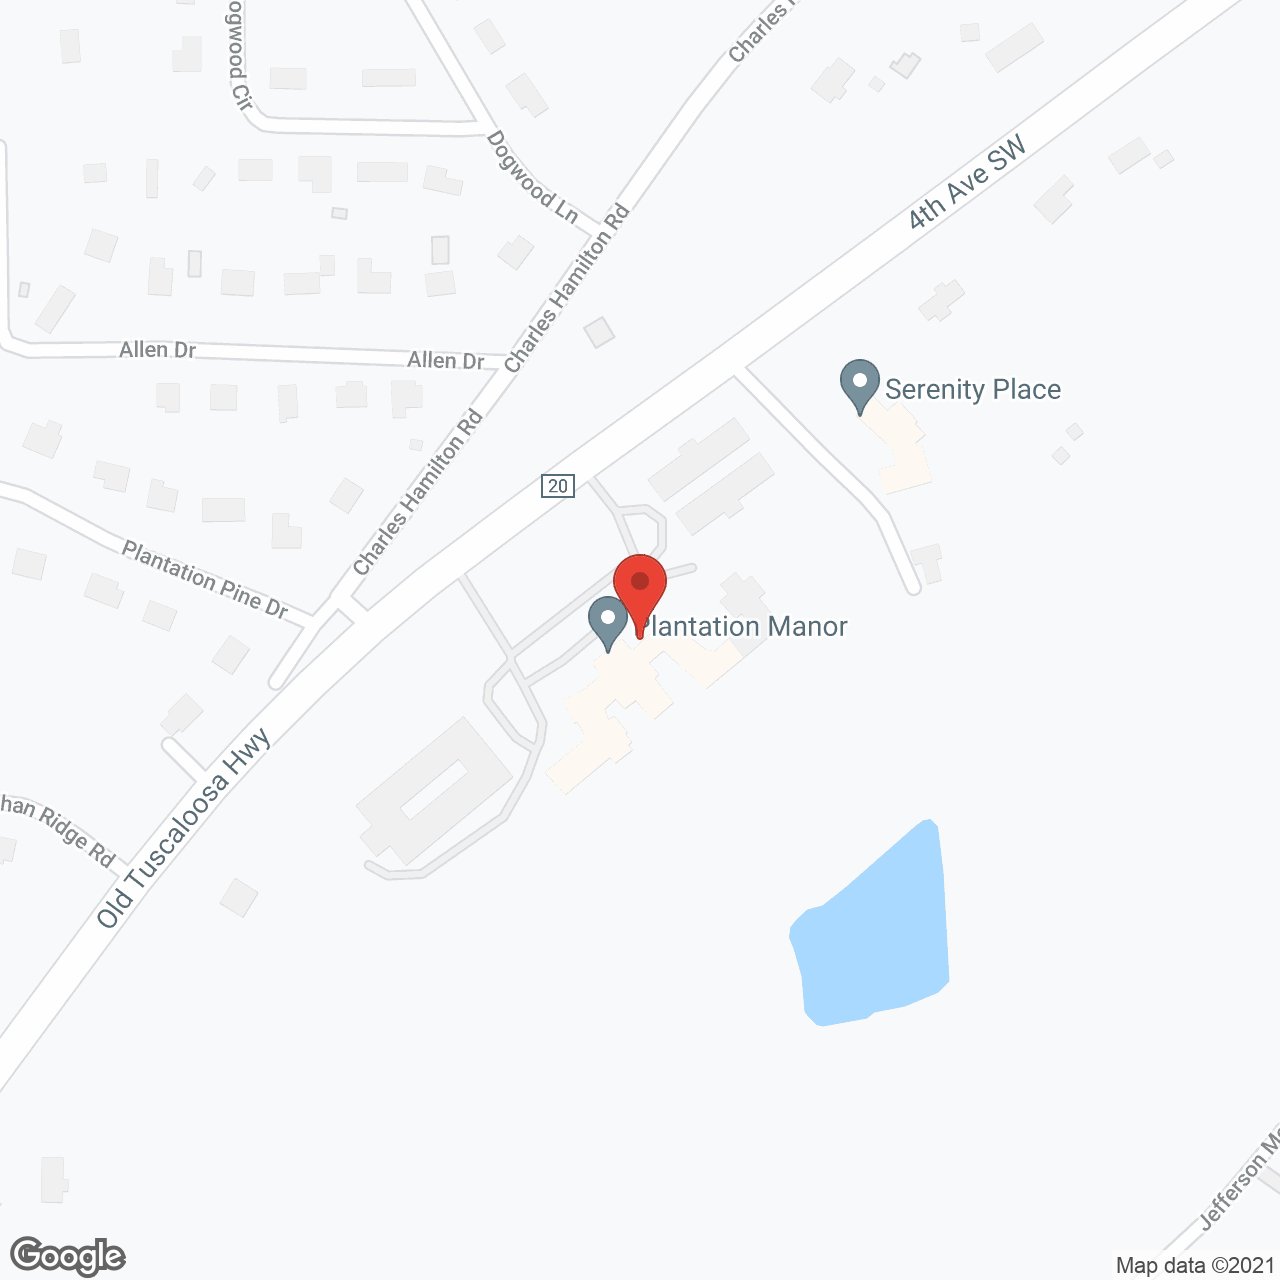 Plantation Manor in google map